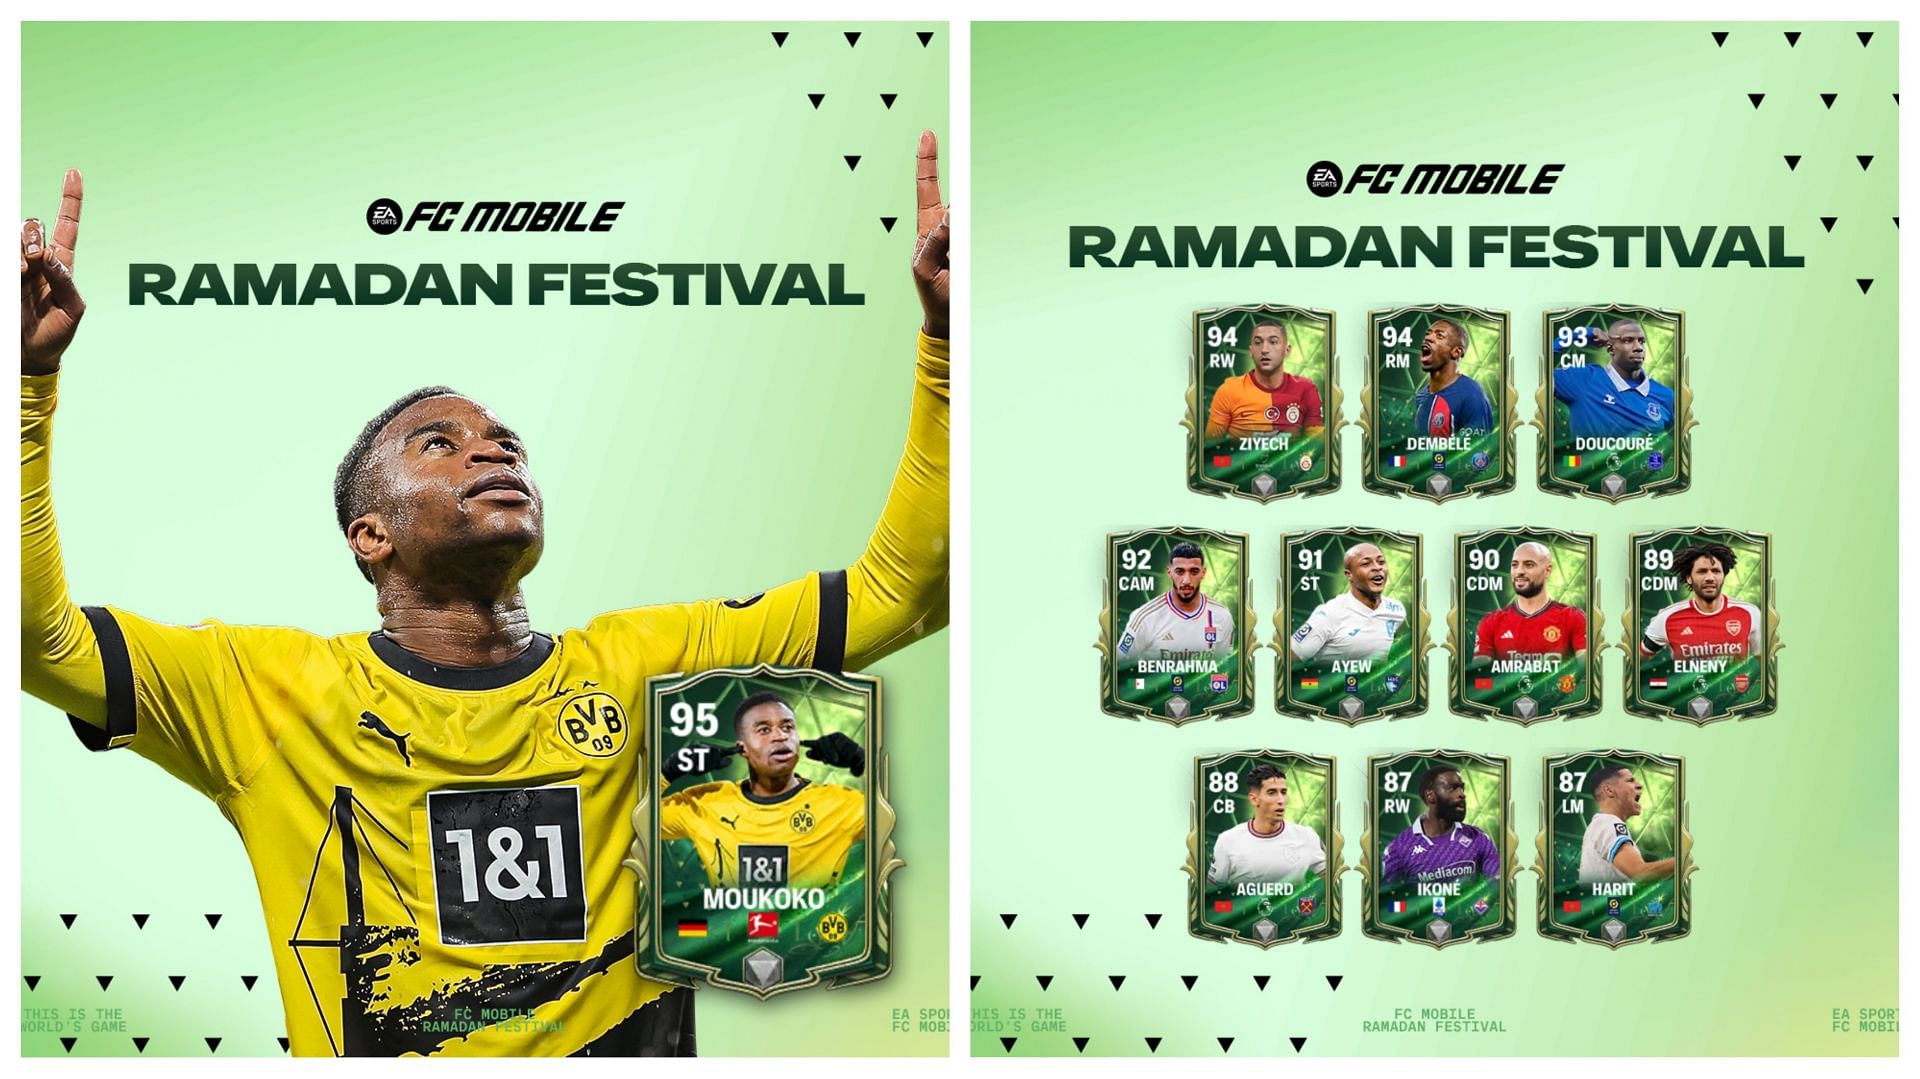 FC Mobile Ramadan Festival event is around the corner